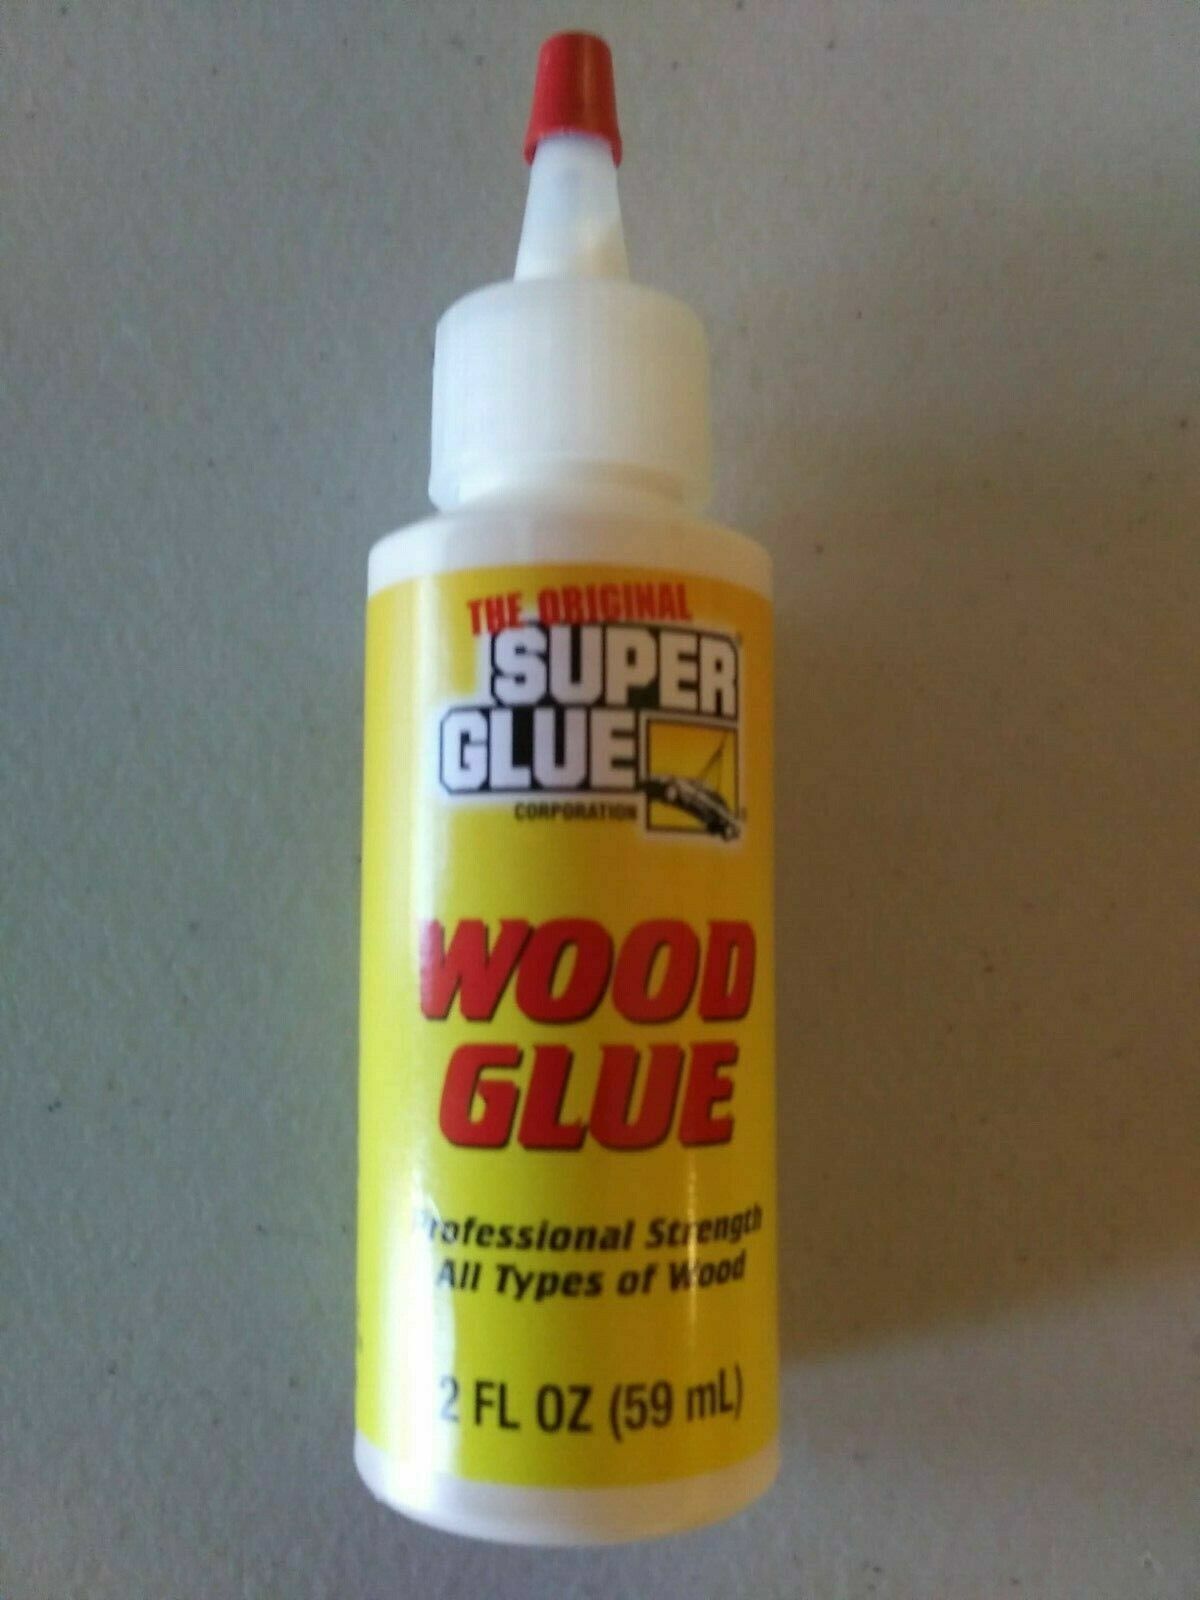 Superglue Wood Glue 59ml